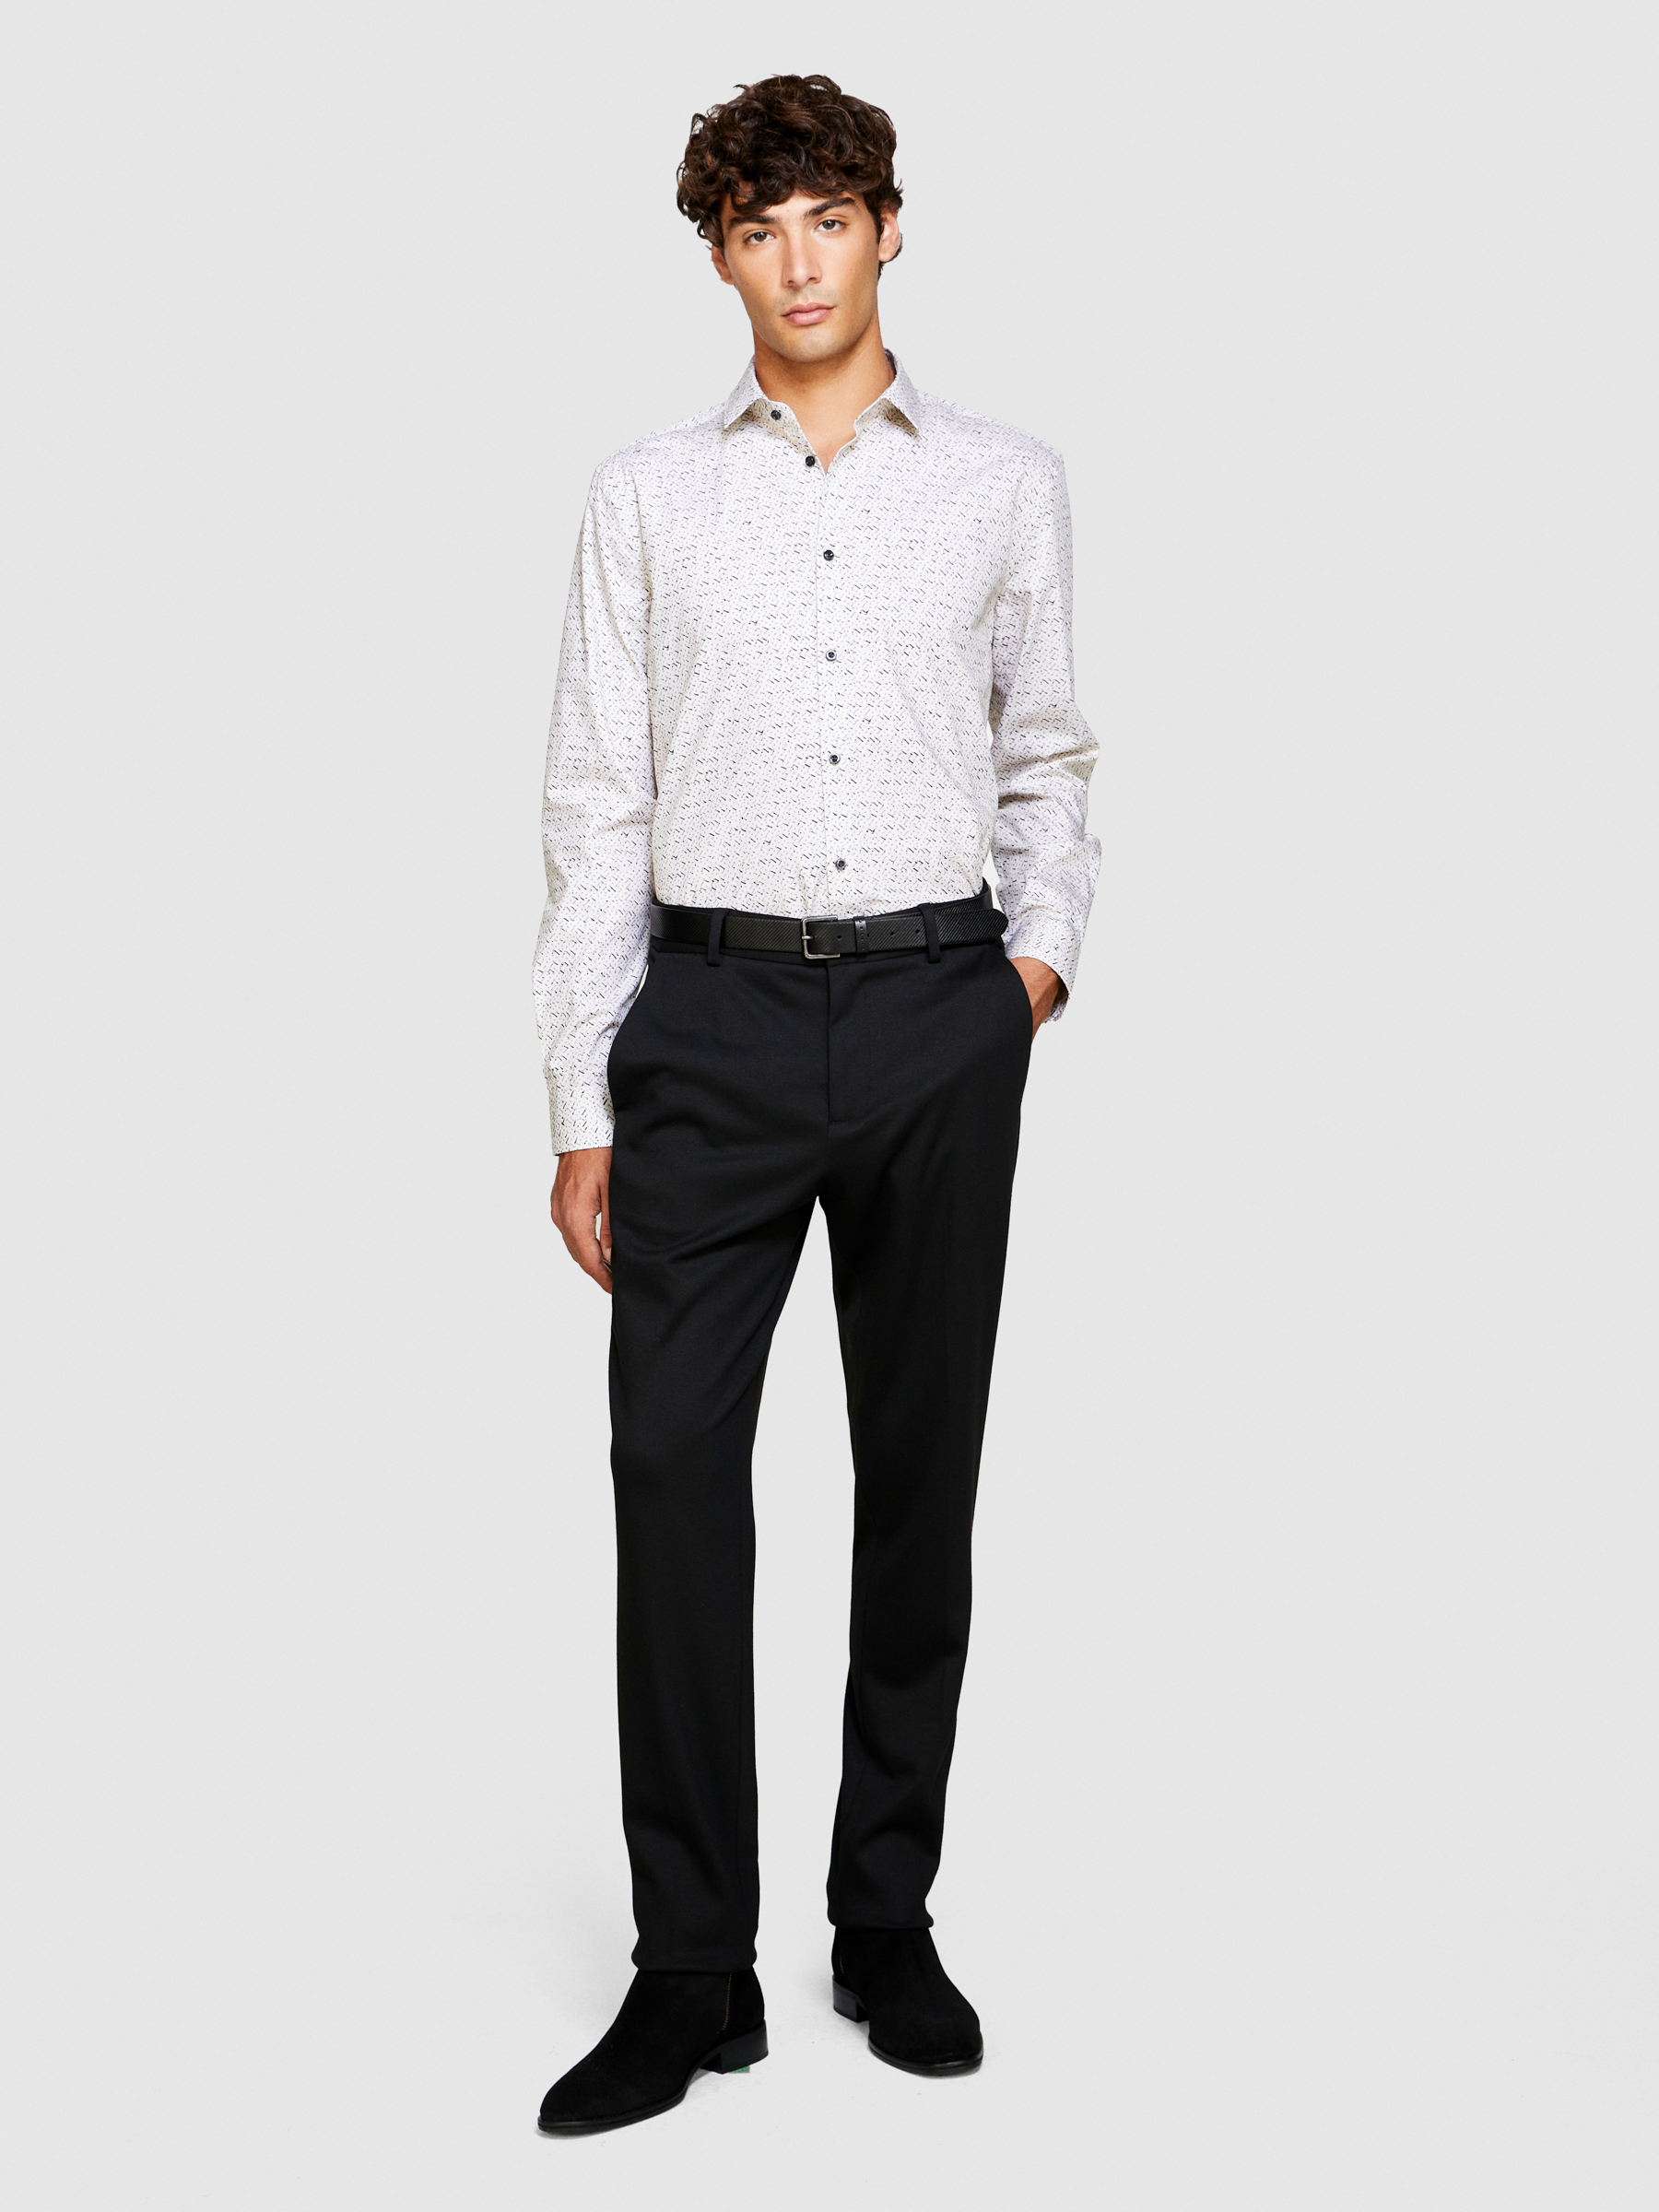 Sisley - Slim Fit Printed Shirt, Man, Creamy White, Size: 42